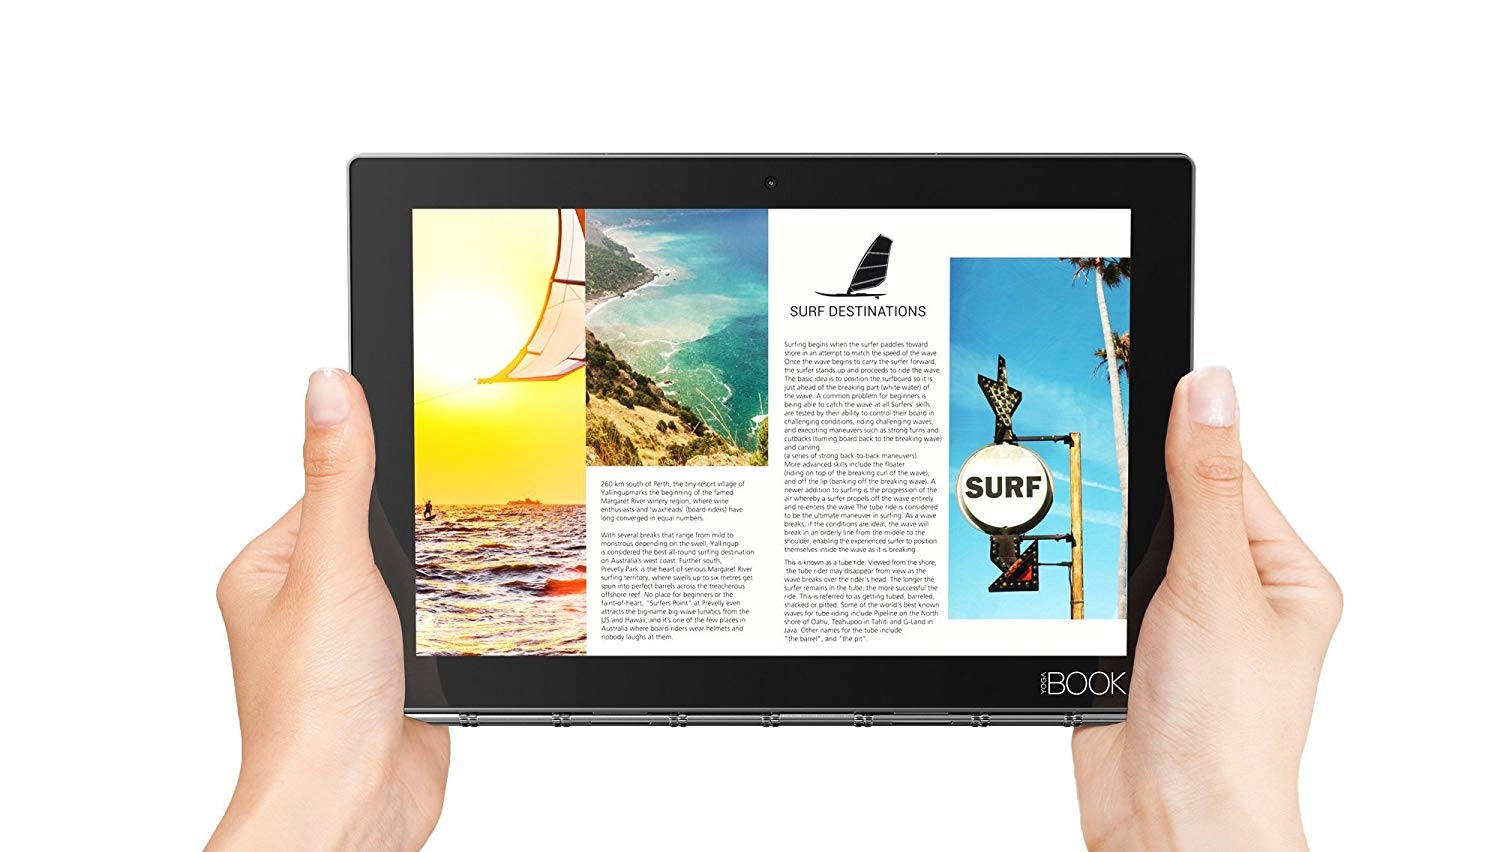 Lenovo Yoga Book laptop image